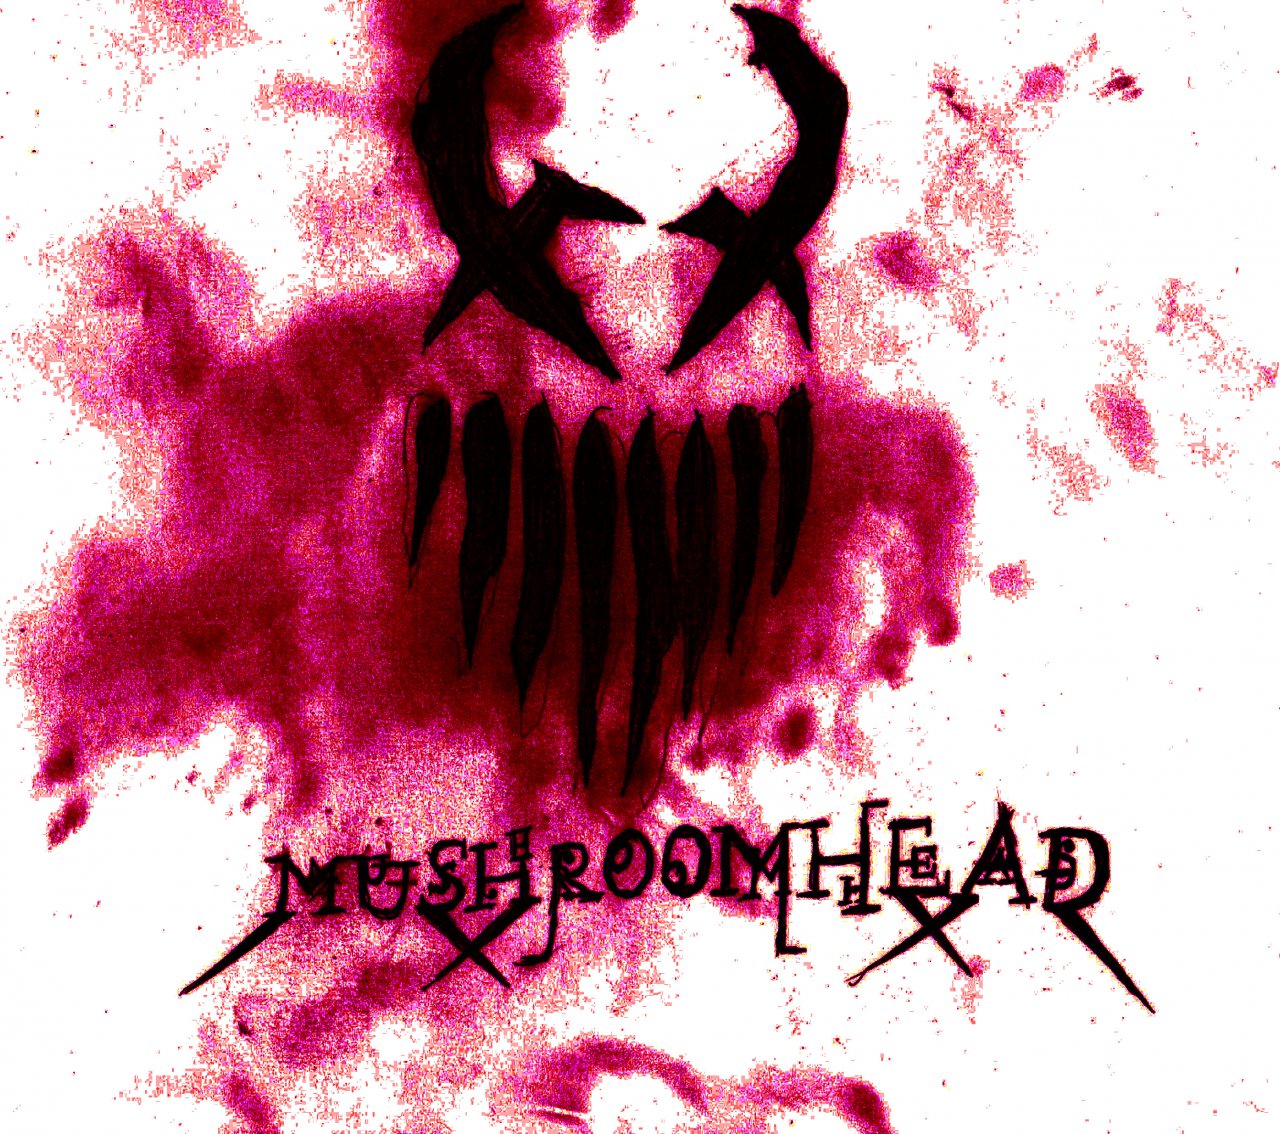 mushroomhead band logo